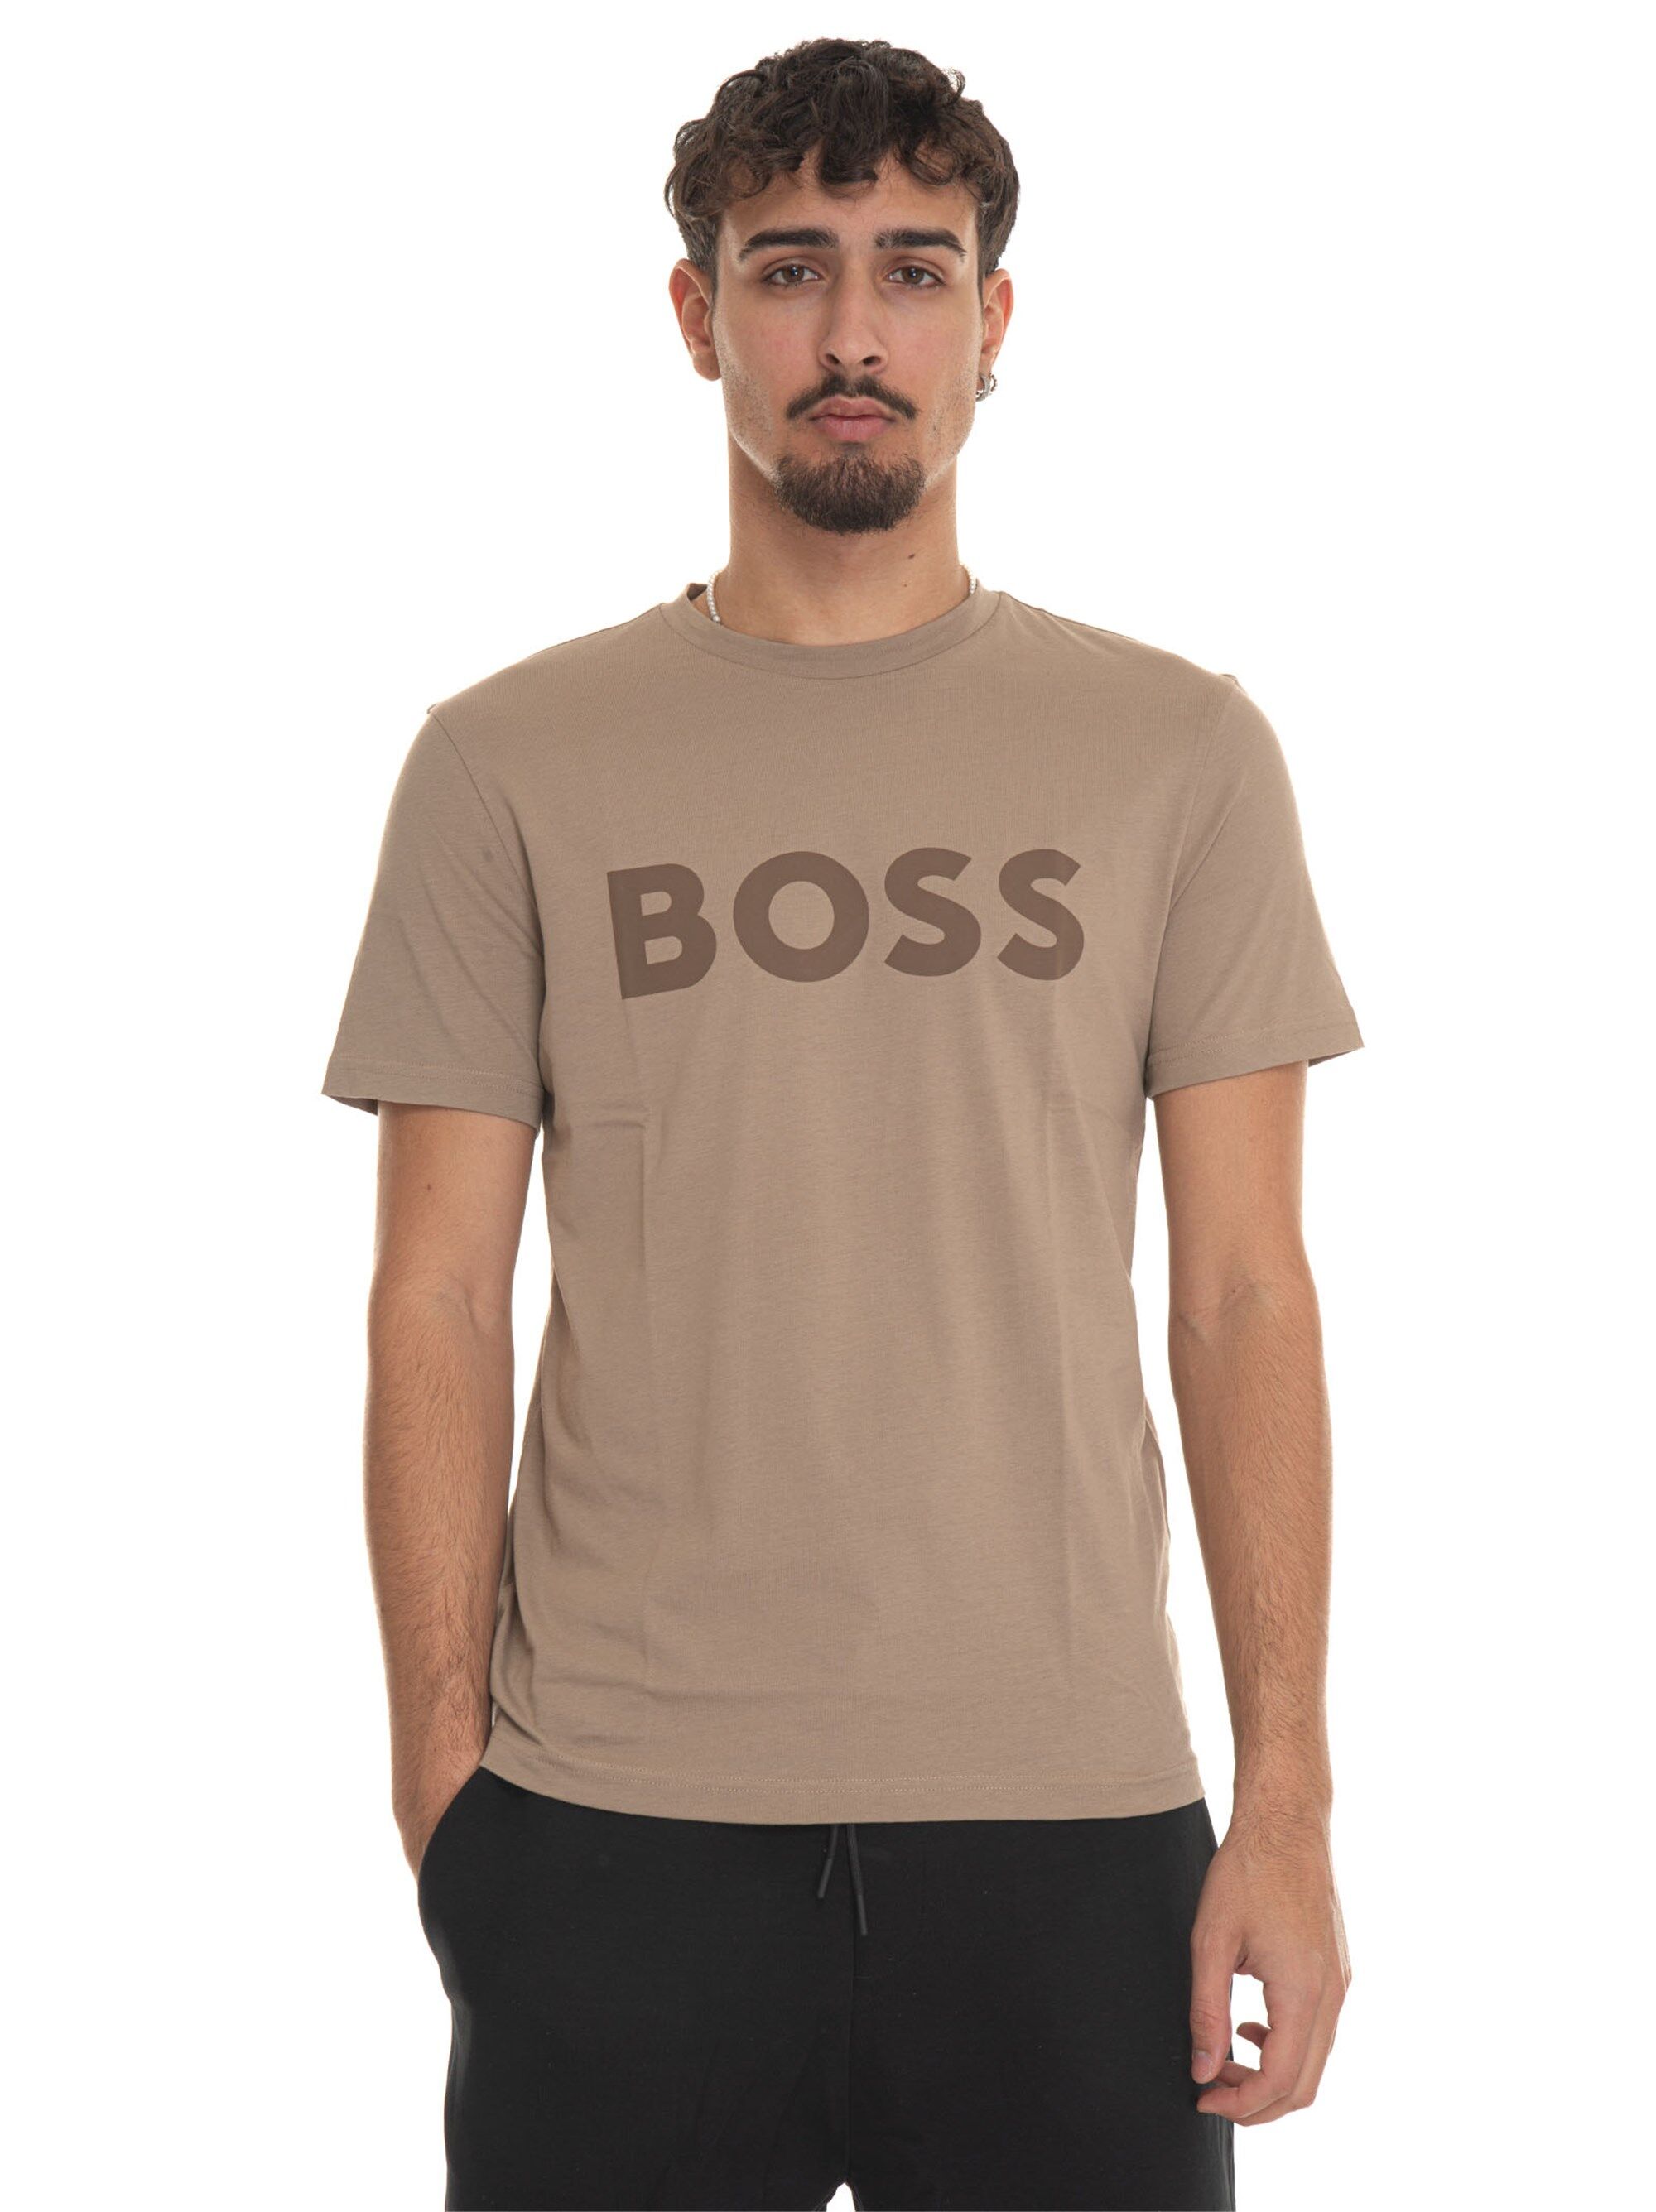 Boss T-shirt girocollo Beige Uomo L